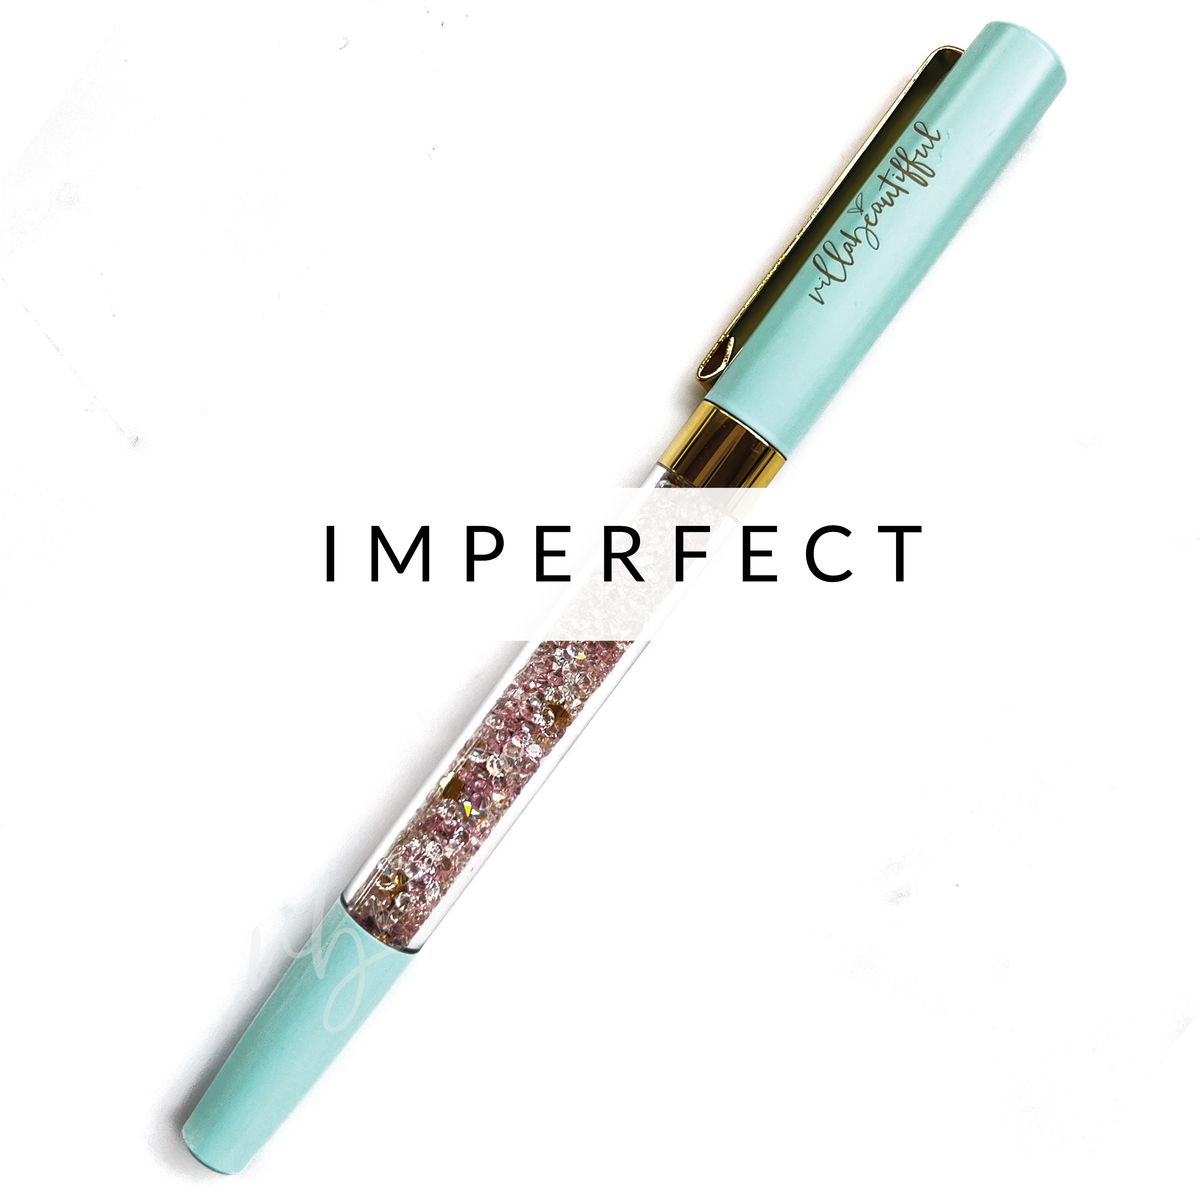 Primrose Garden Imperfect Crystal VBPen | limited kit pen